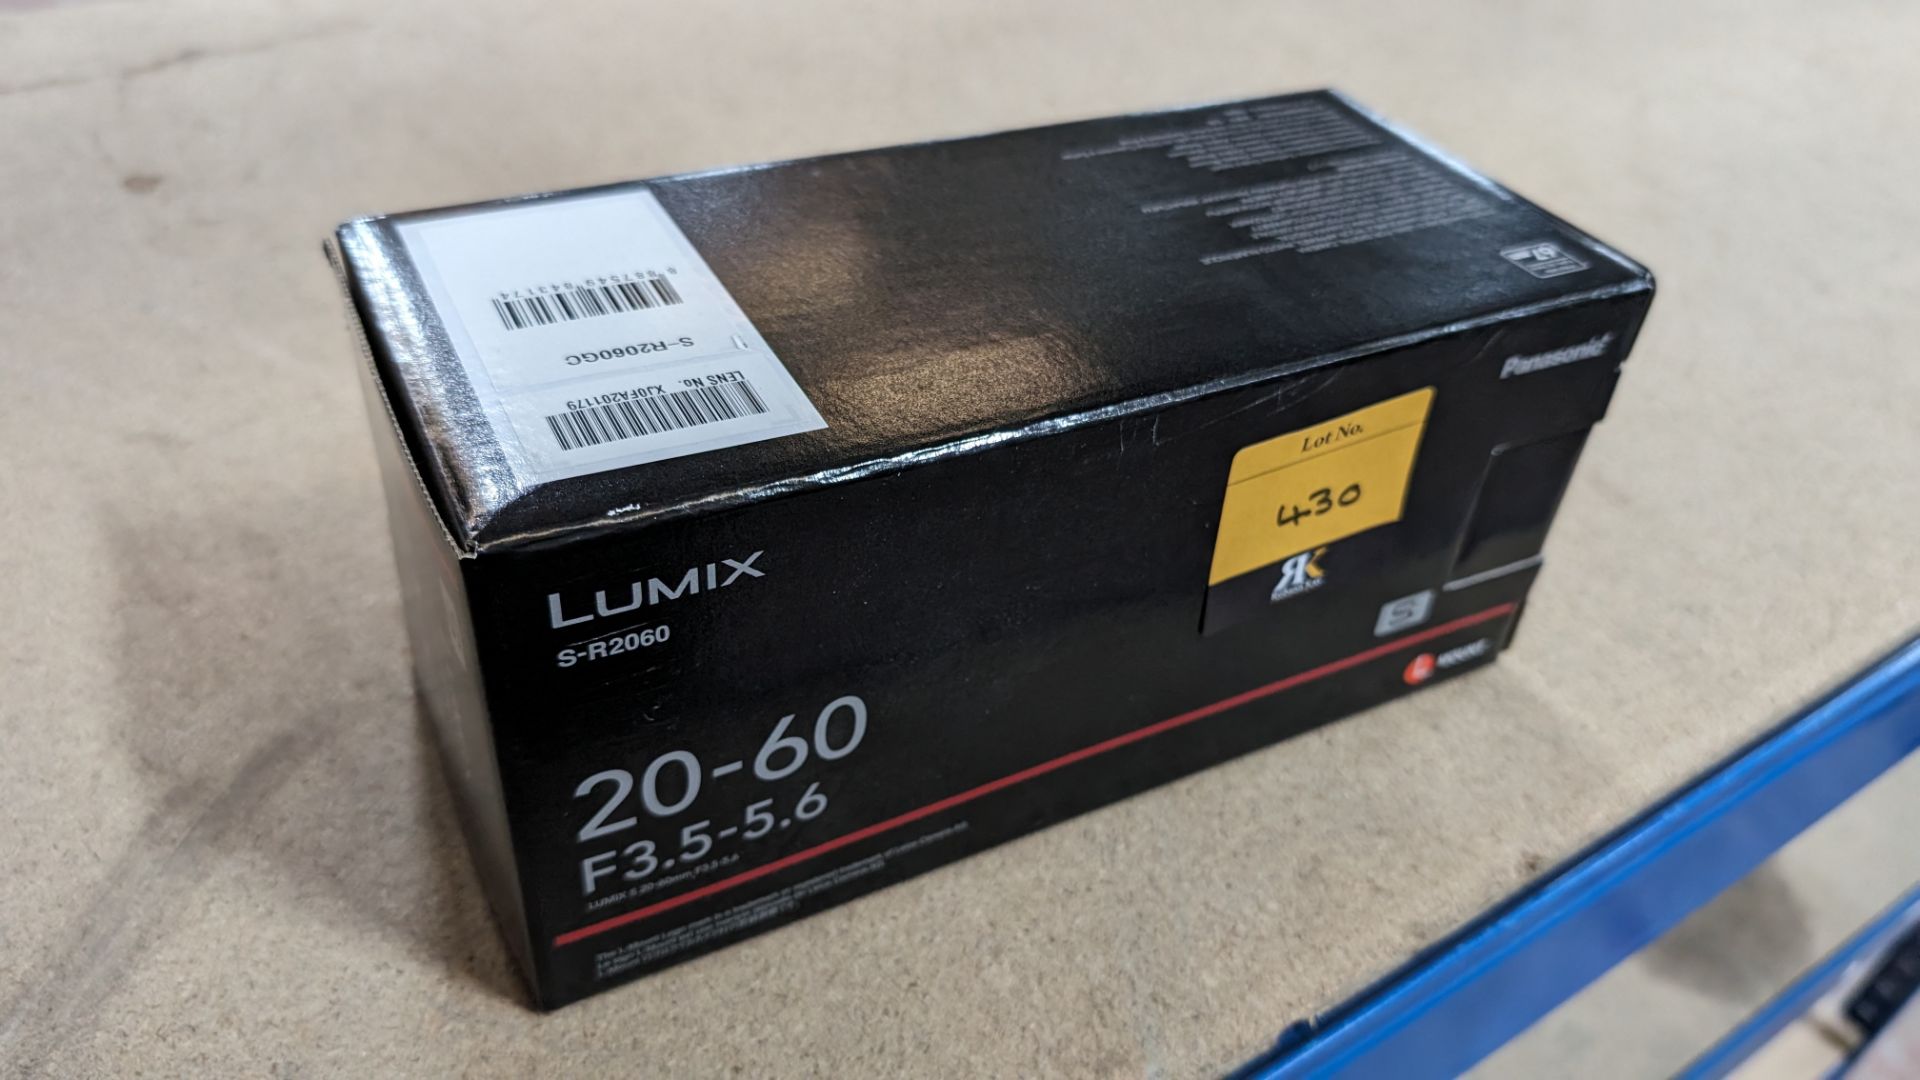 Panasonic Lumix model S-R2060 lens, 20-60mm, f3.5-5.6 - Image 2 of 10